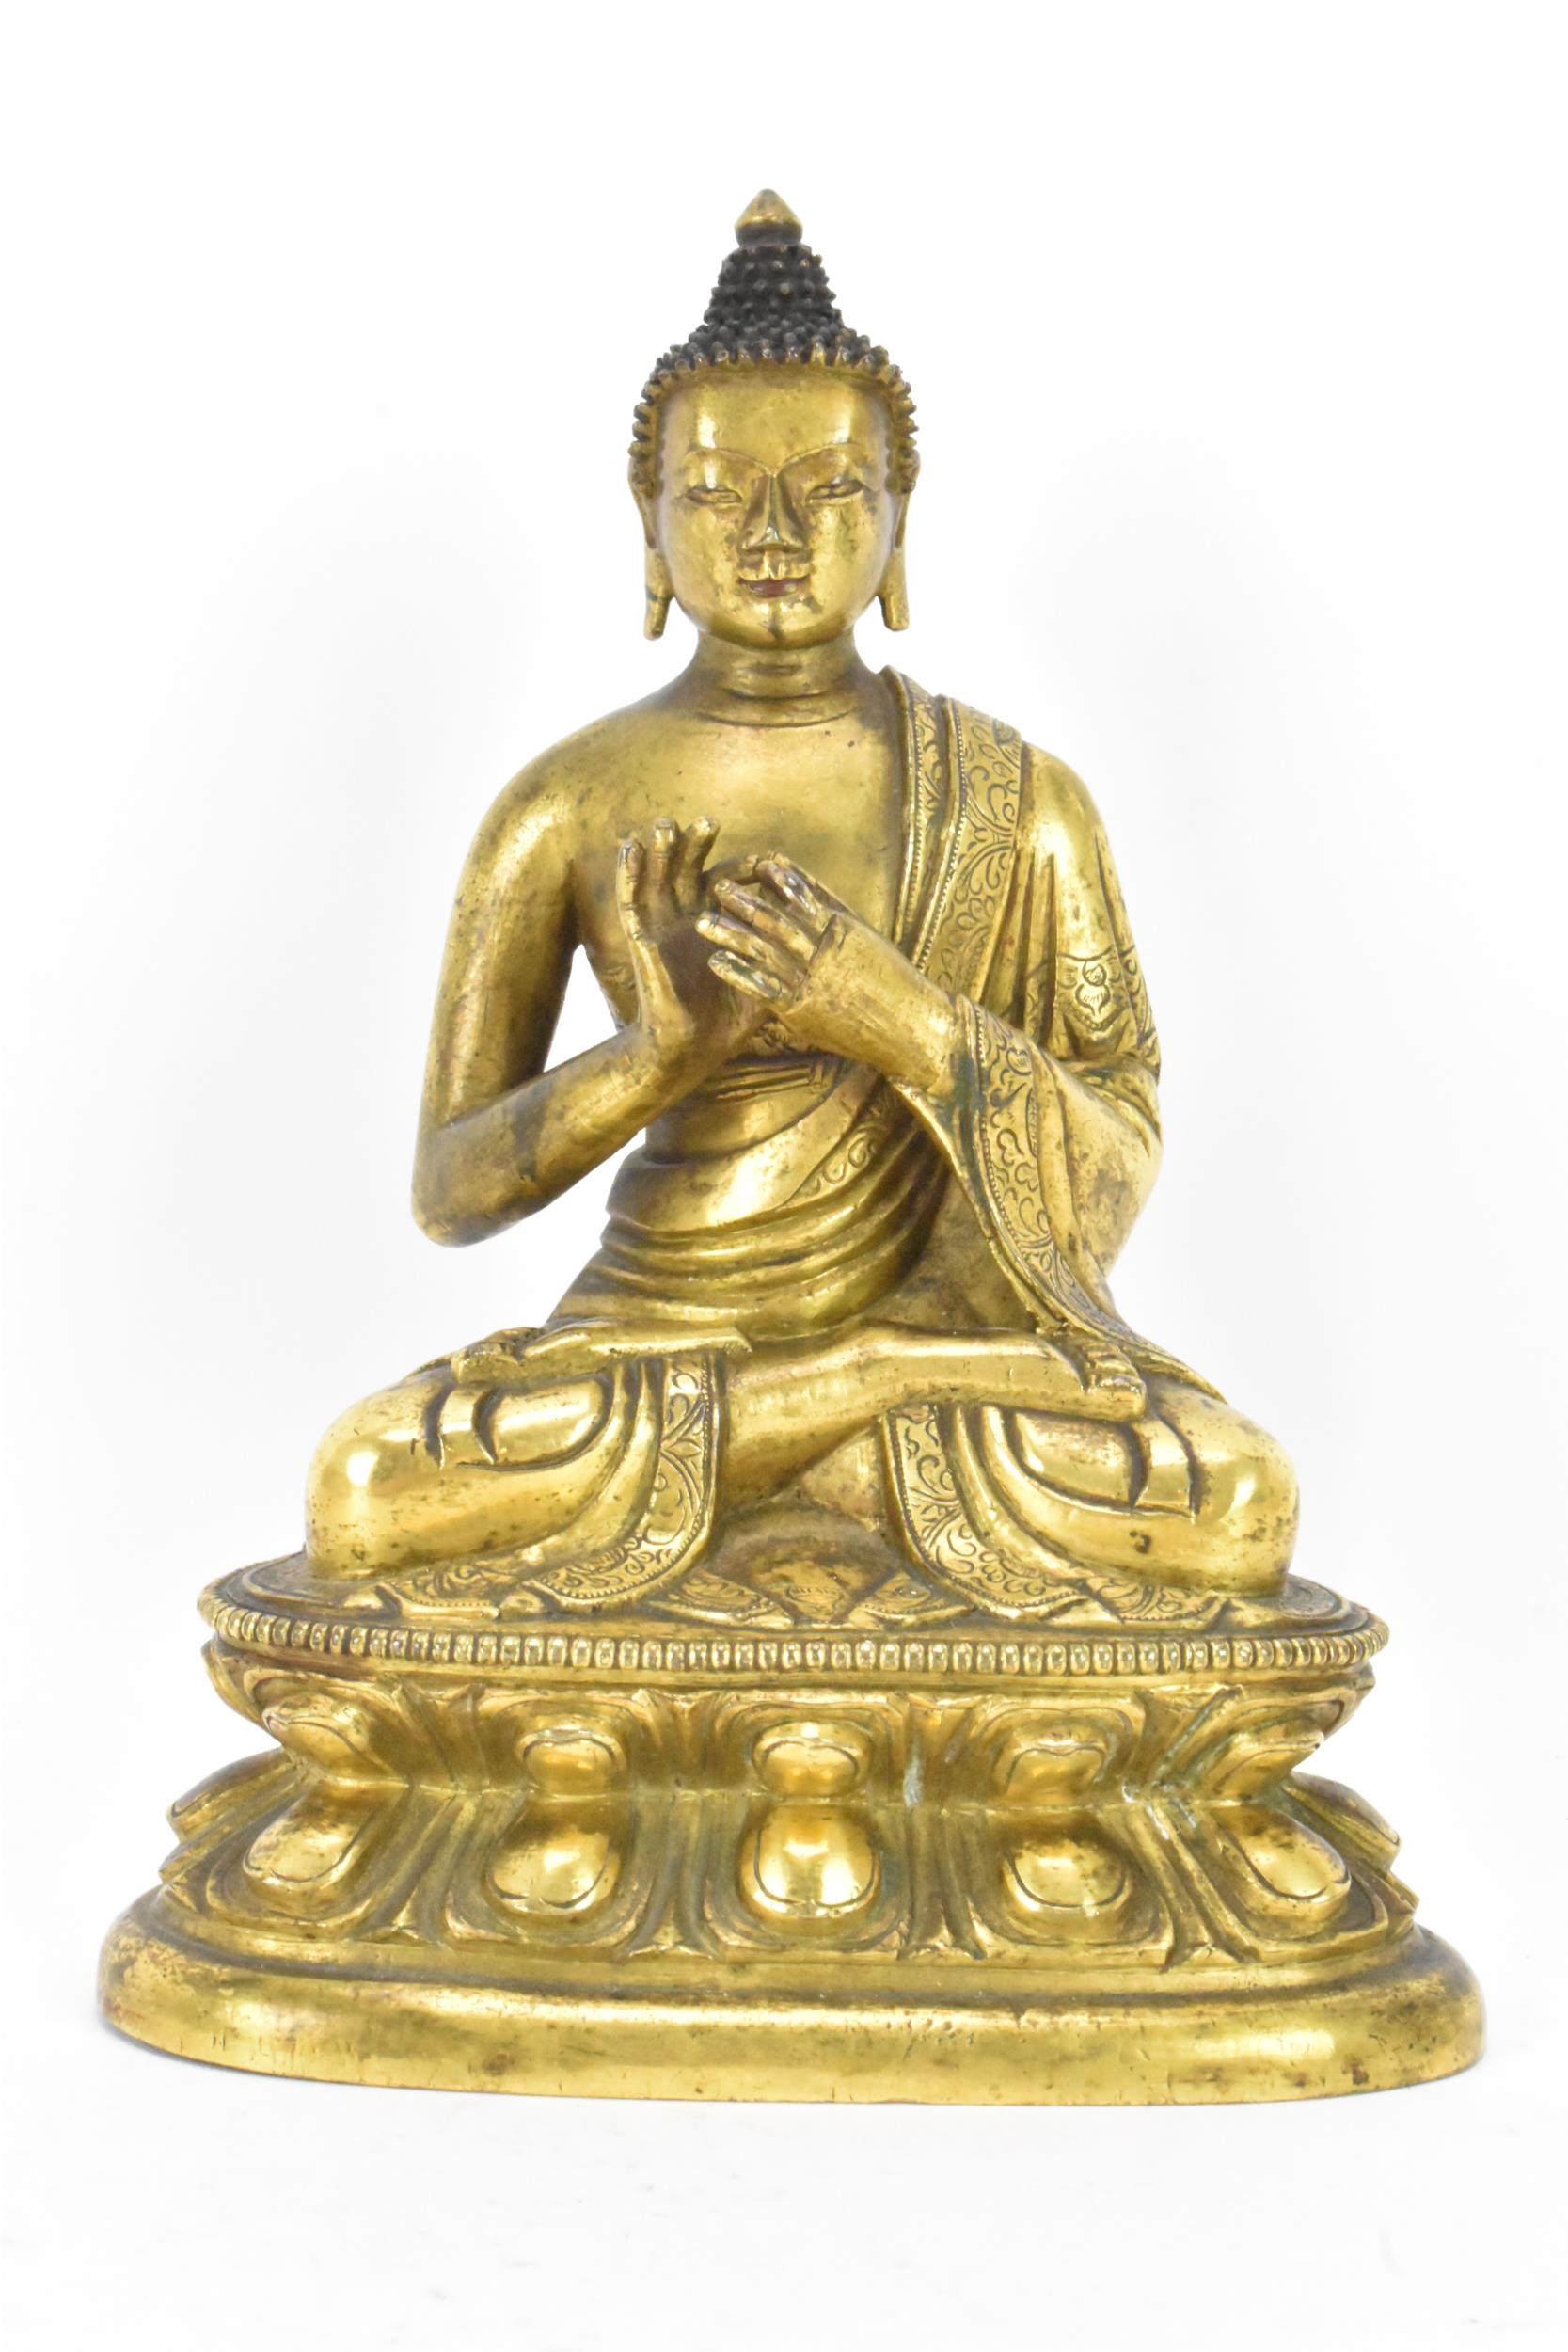 A Sino Tibetian gilt bronze figure of Buddha, 18th/19th century, dressed in monastic robe, with